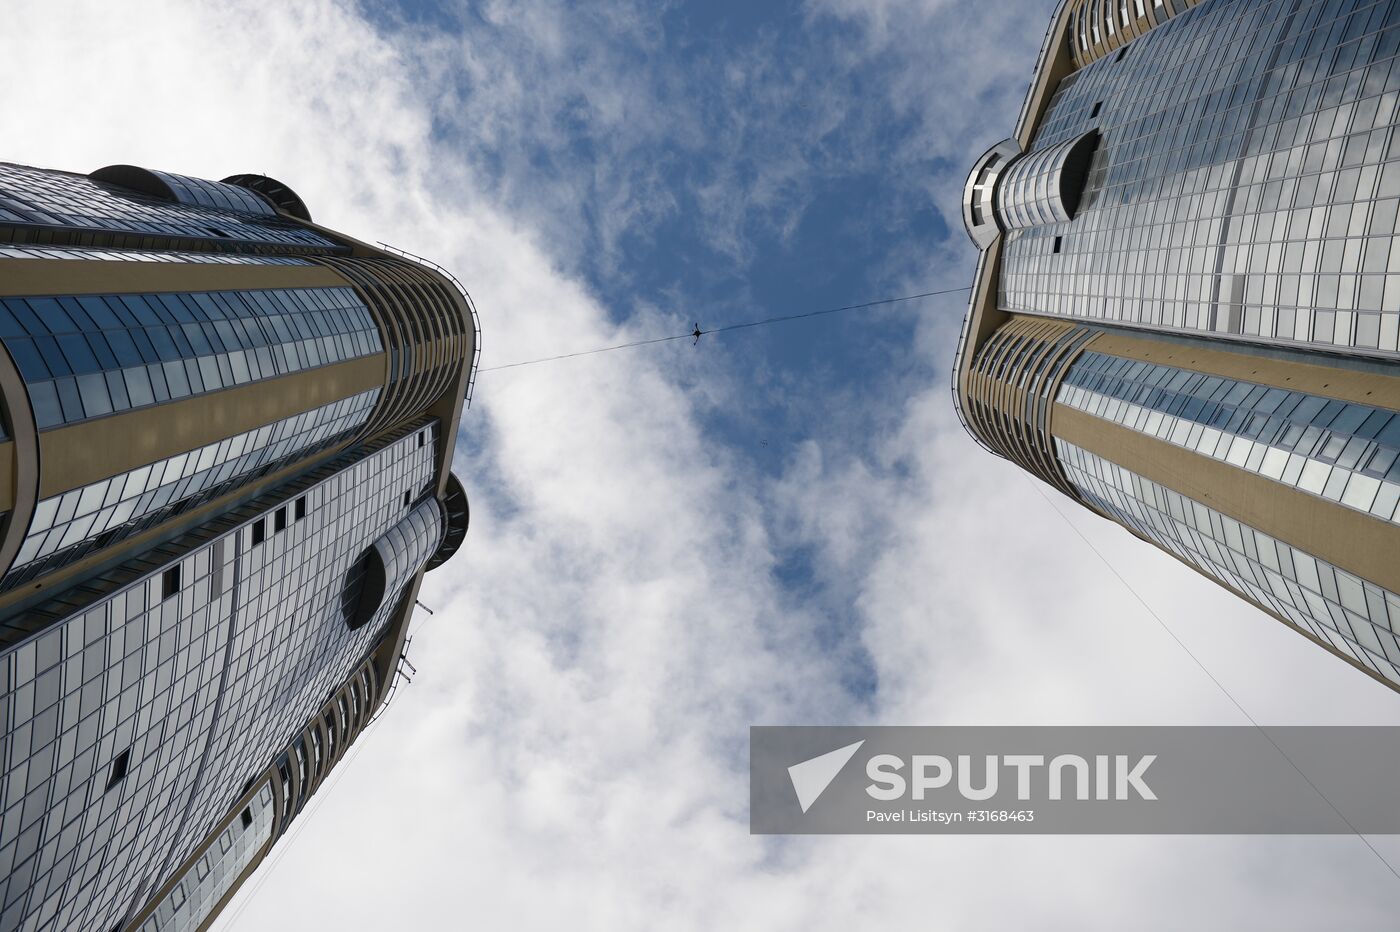 Tightrope walker Maxim Kagin walks between two skyscrapers in Yekaterinburg